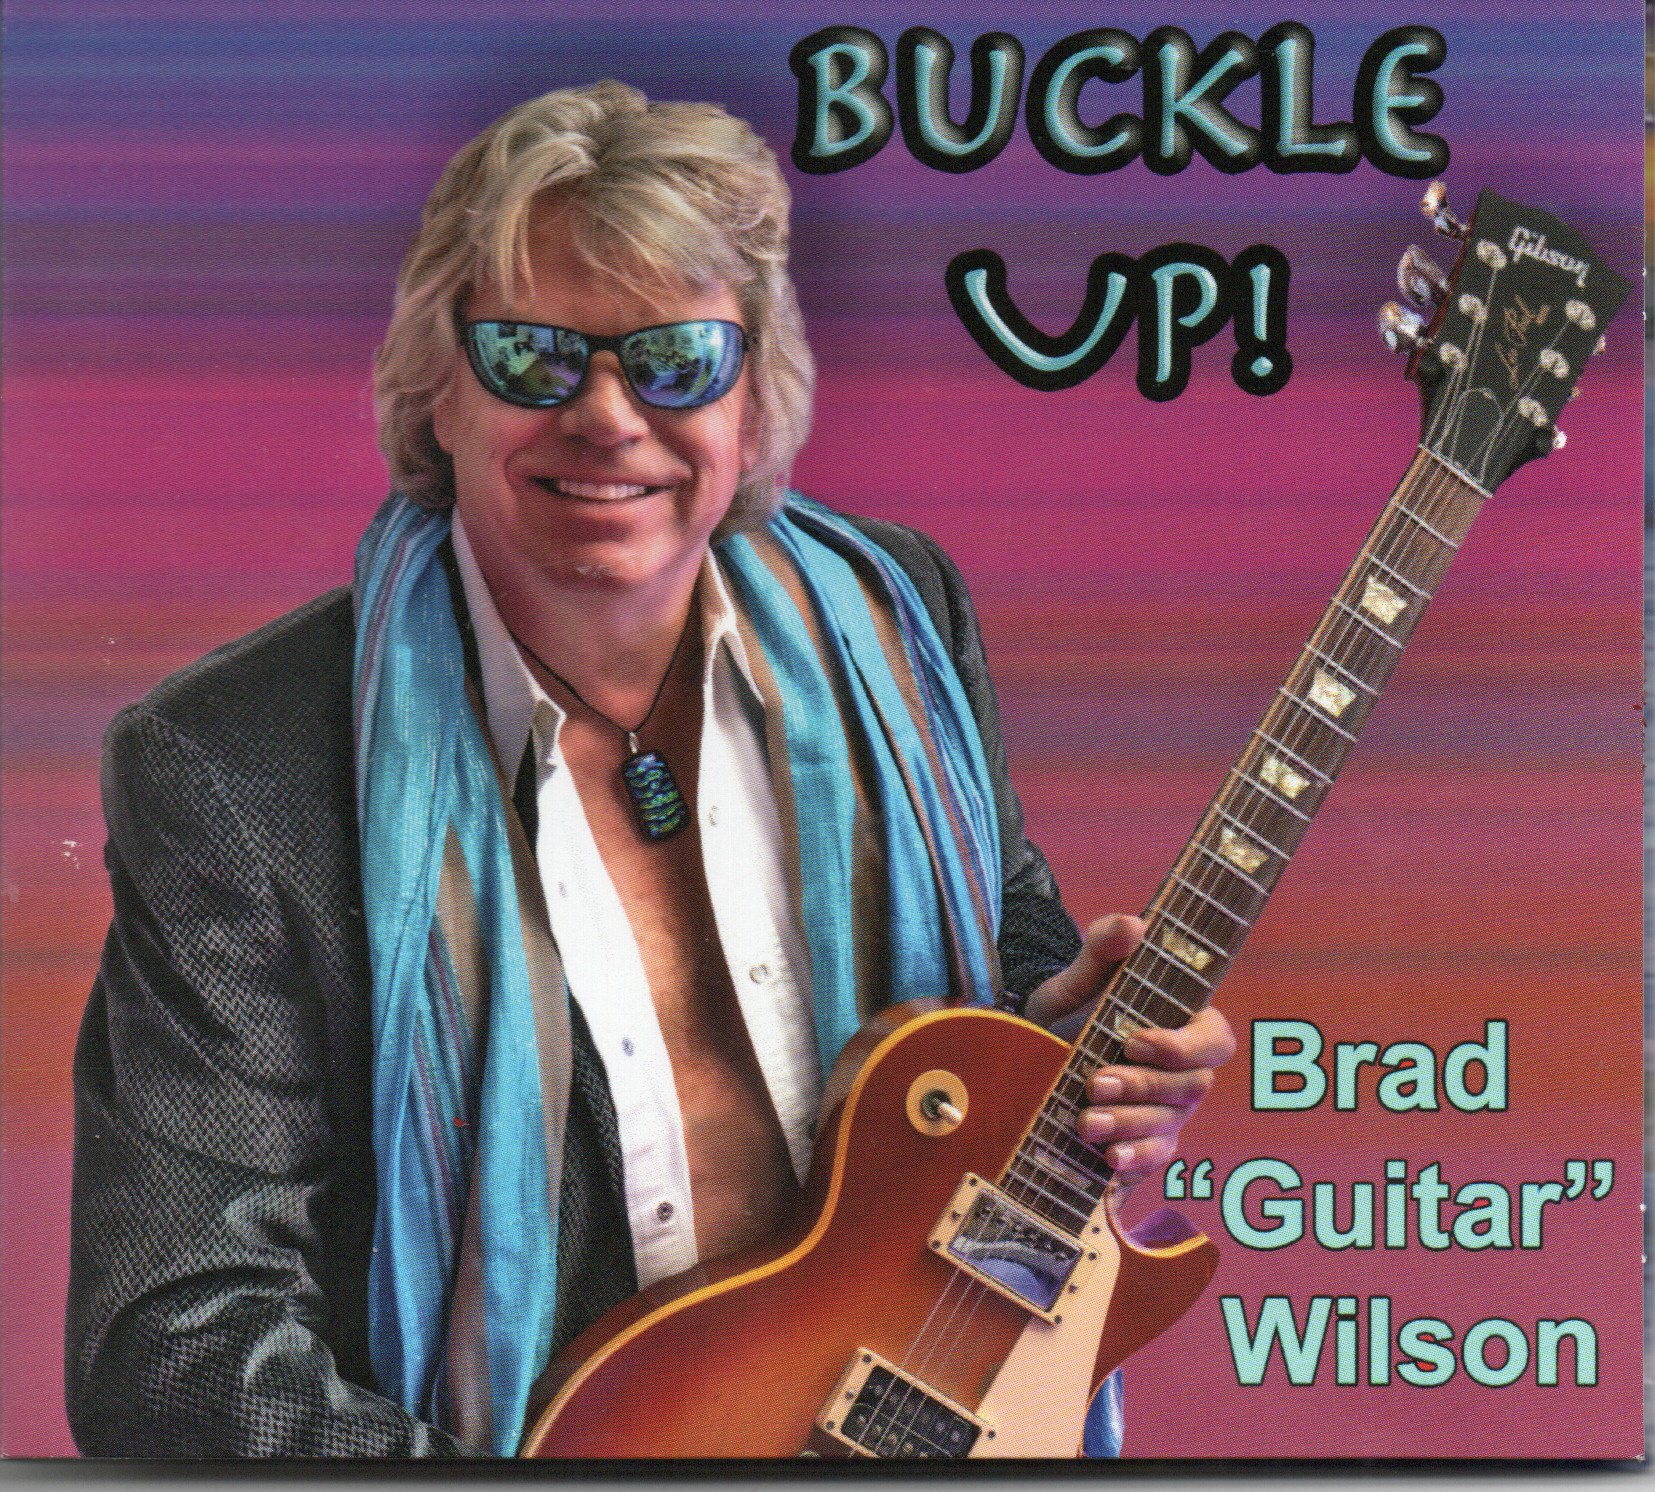 Brad "Guitar" Wilson "Buckle Up!"